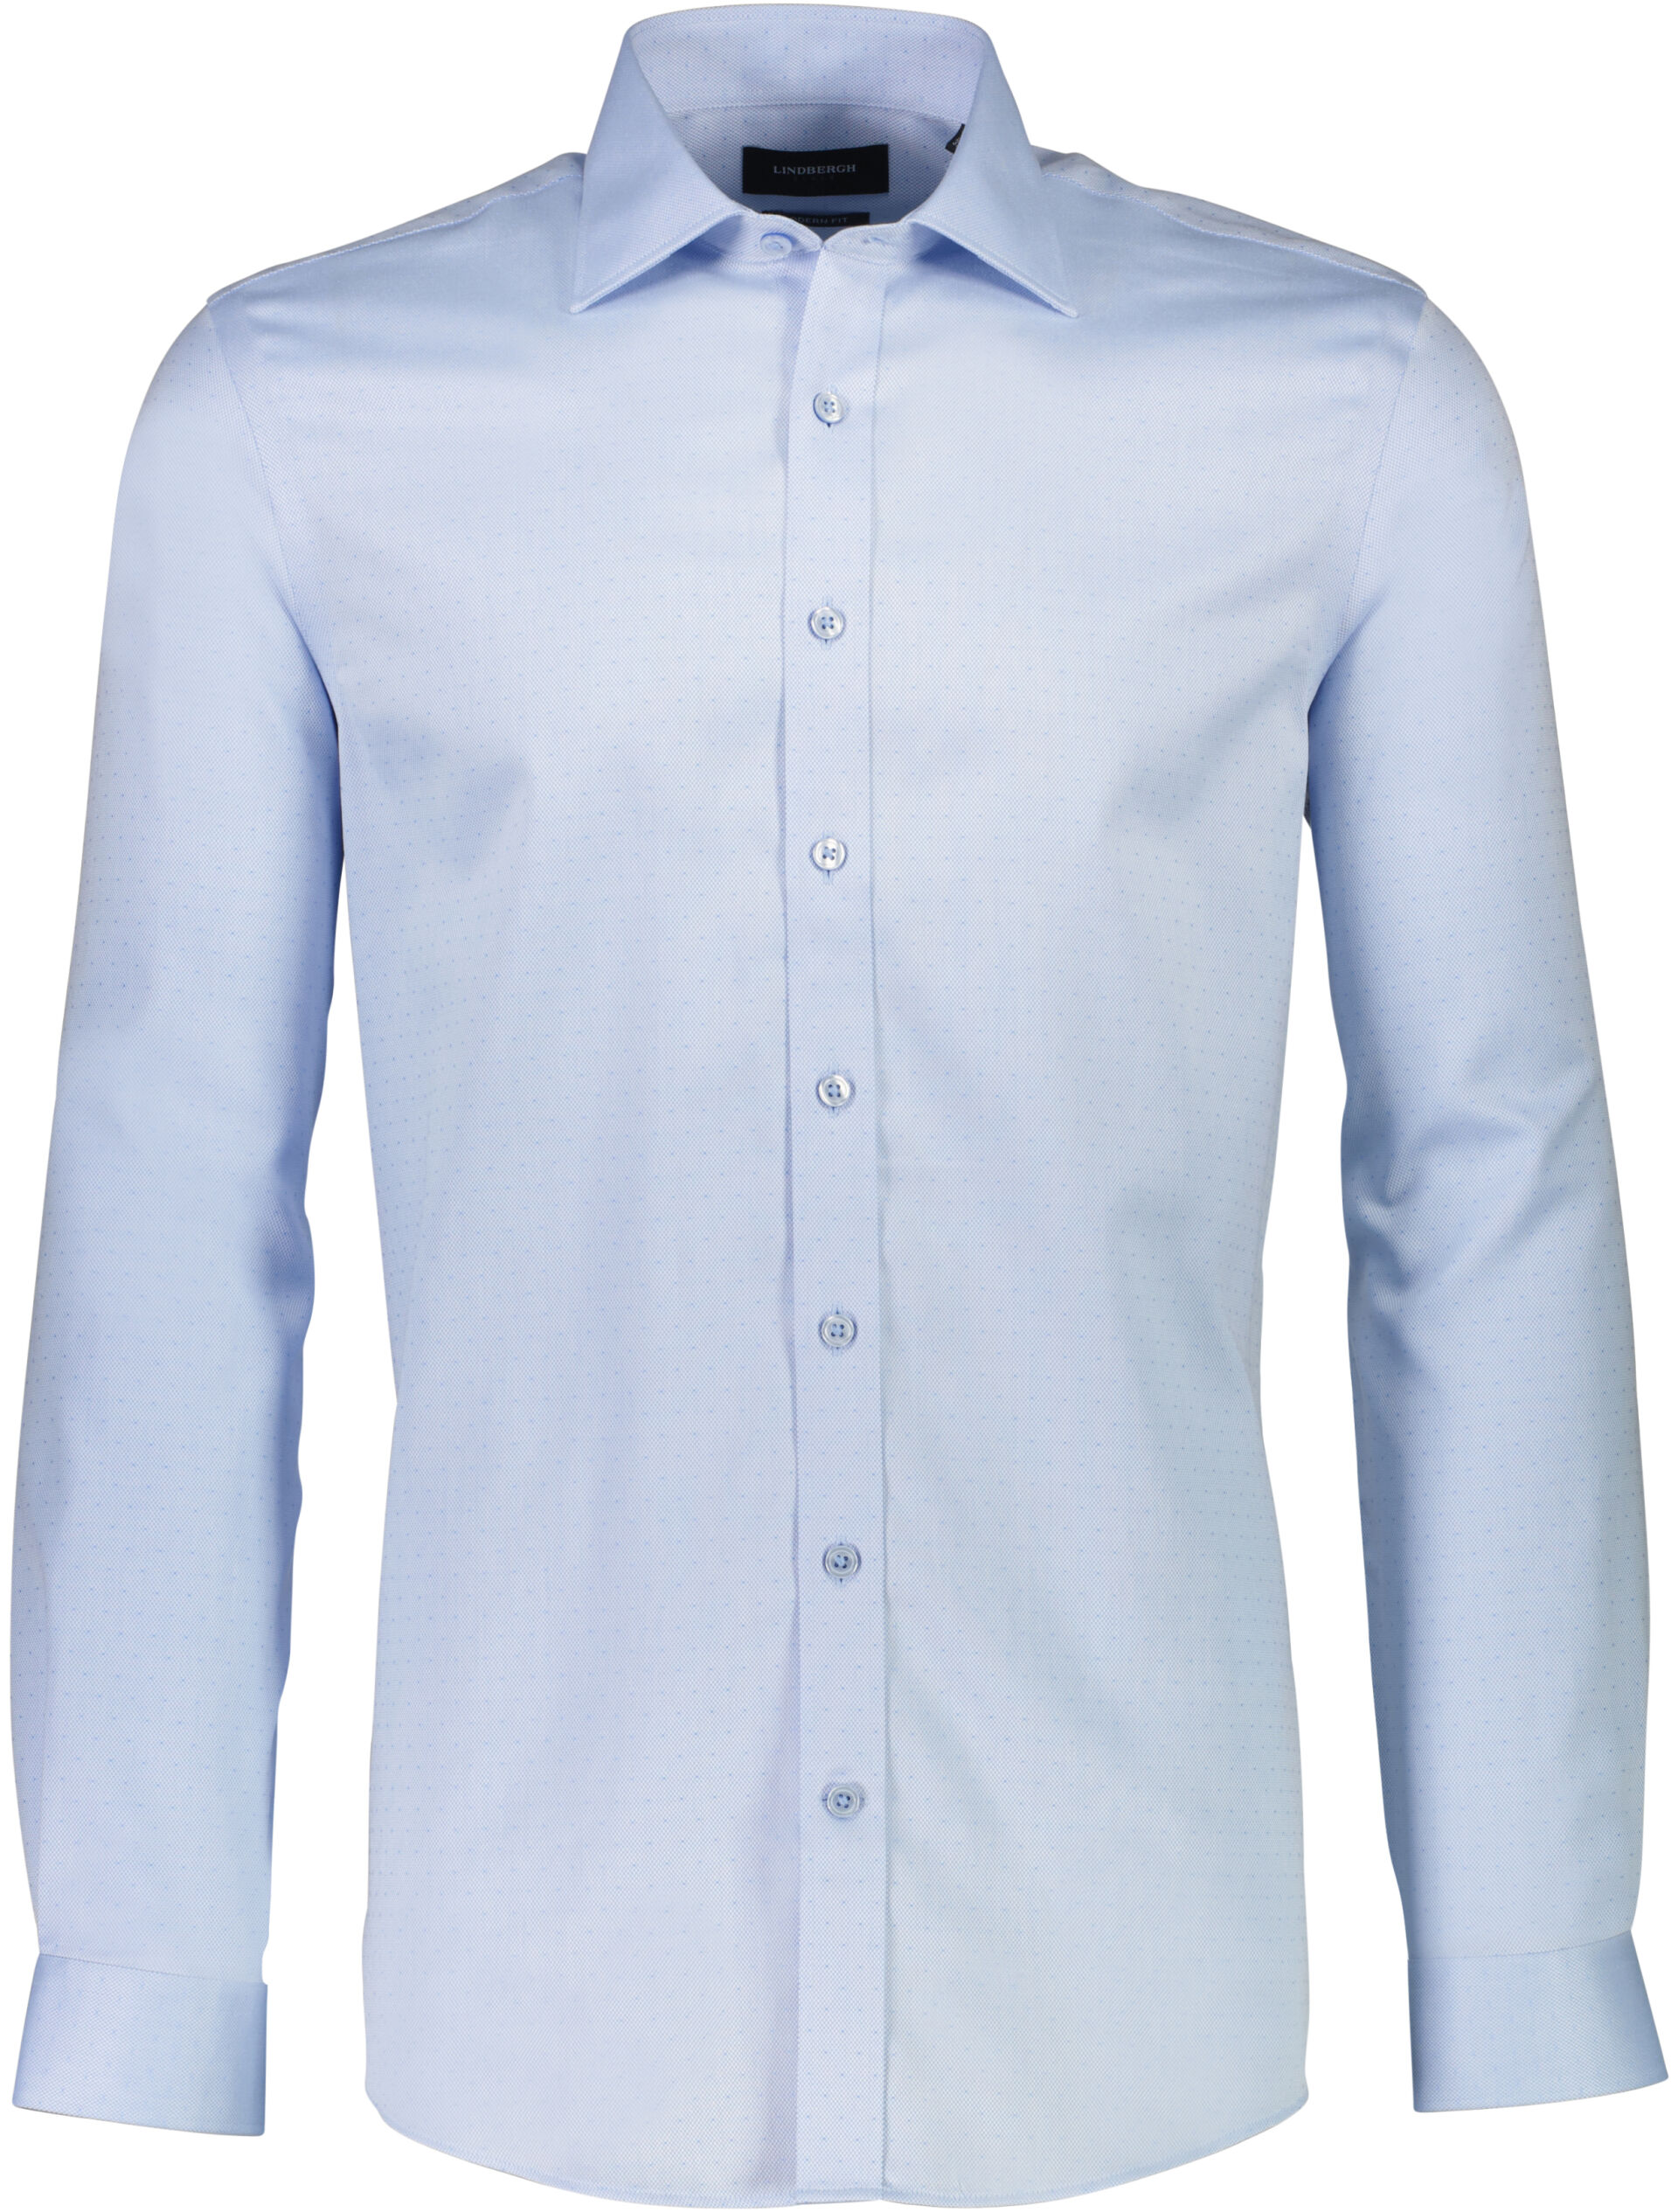 Business casual shirt 30-242184